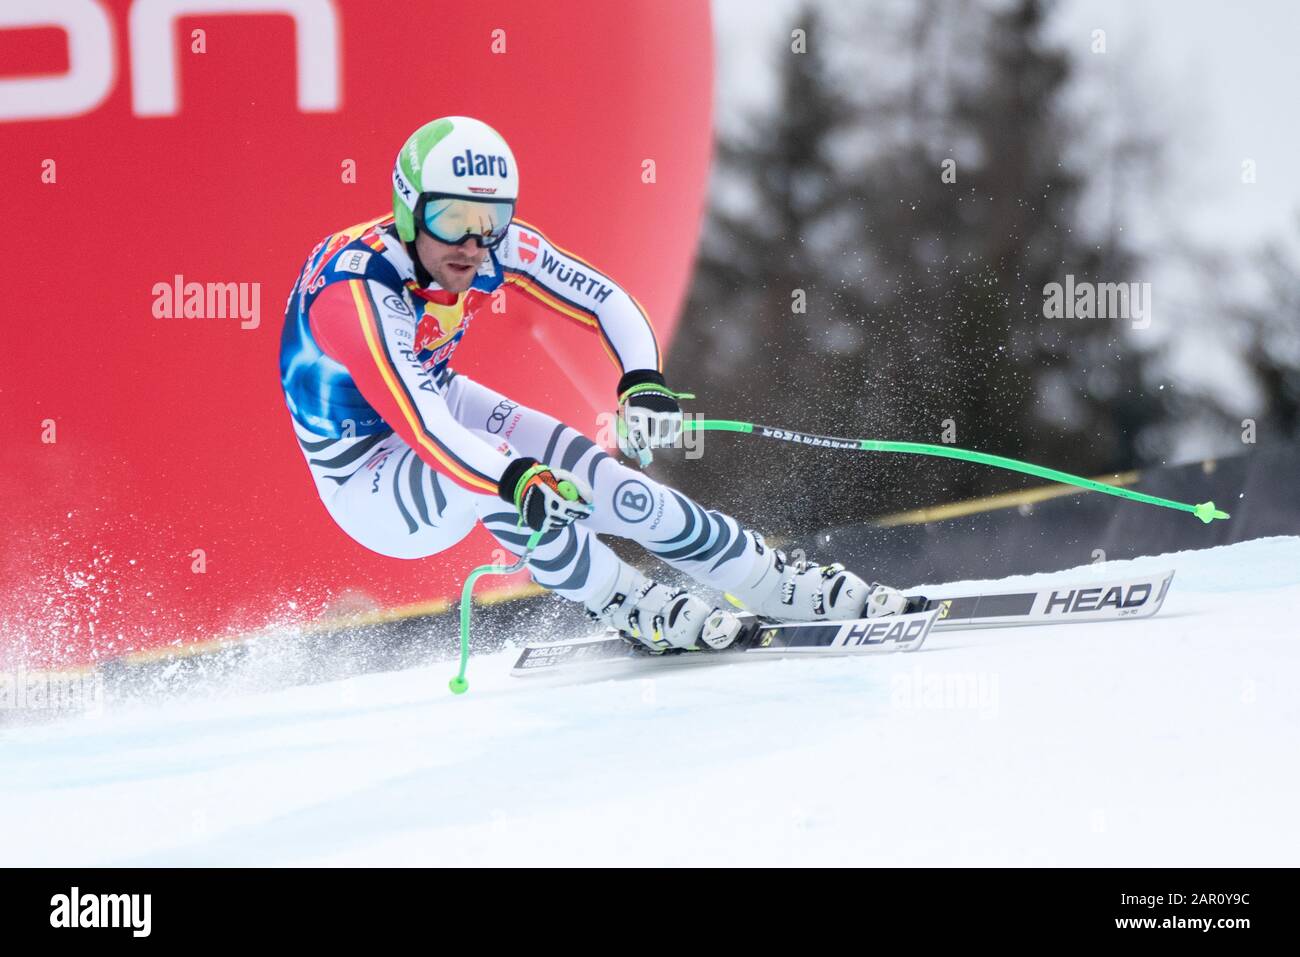 Dominik Schwaiger of Germany at the Ski Alpin: 80. Hahnenkamm Race 2020 - Audi FIS Alpine Ski World Cup - Men's Downhill at the Streif on January 25, 2020 in Kitzbuehel, AUSTRIA. Credit: European Sports Photographic Agency/Alamy Live News Stock Photo